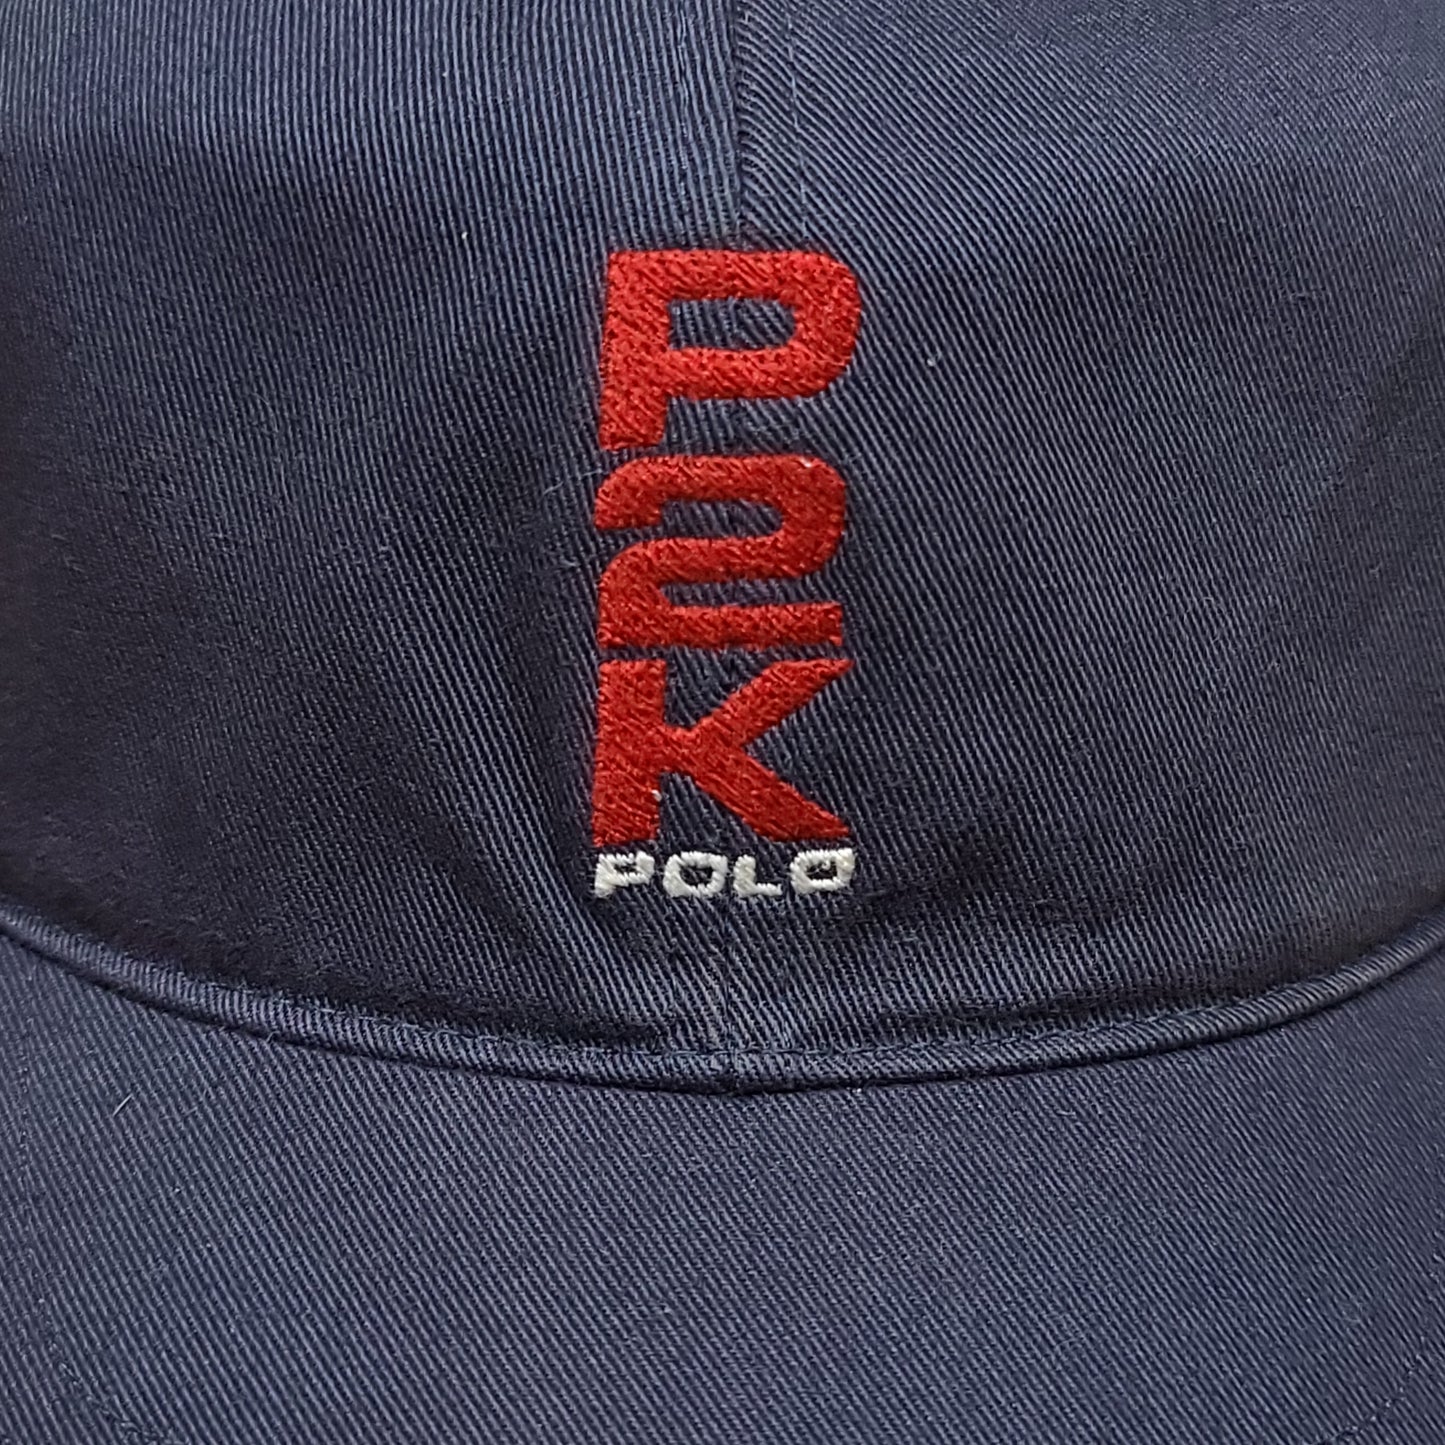 Vintage Polo Ralph Lauren P2K Navy Blue Strap Back Hat